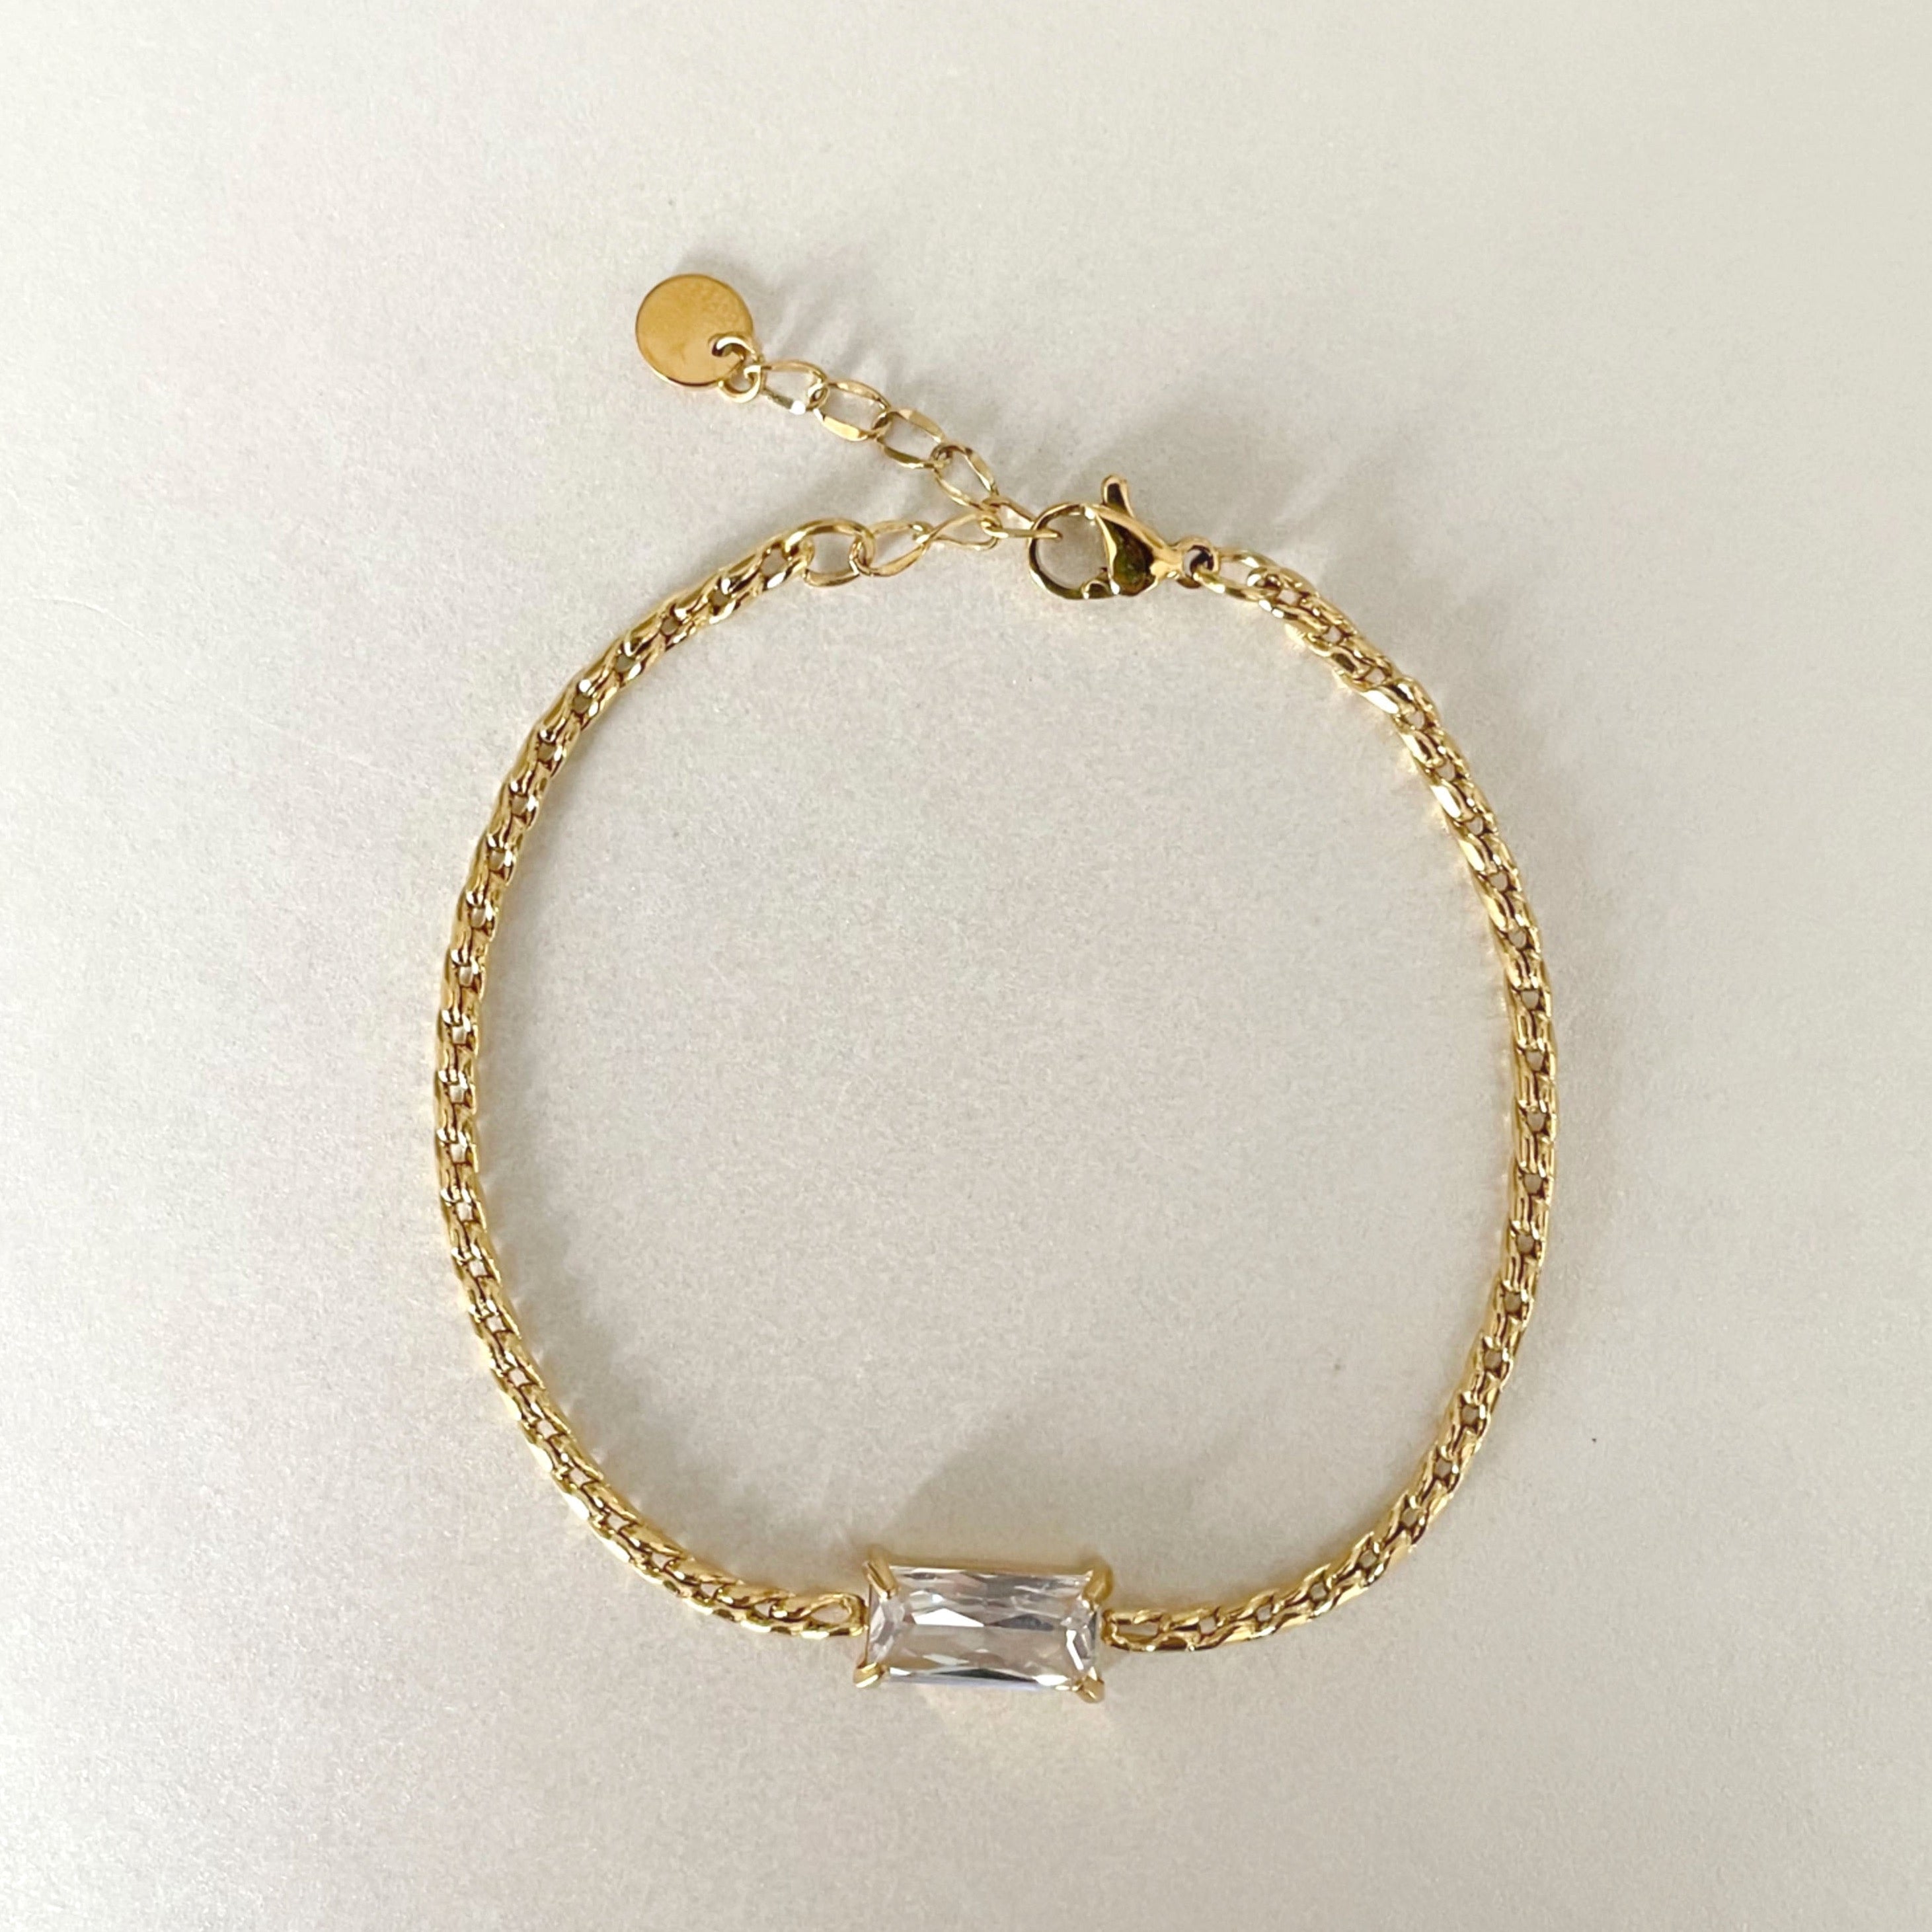 Katerina Luxe 18k Gold Plated Bracelet